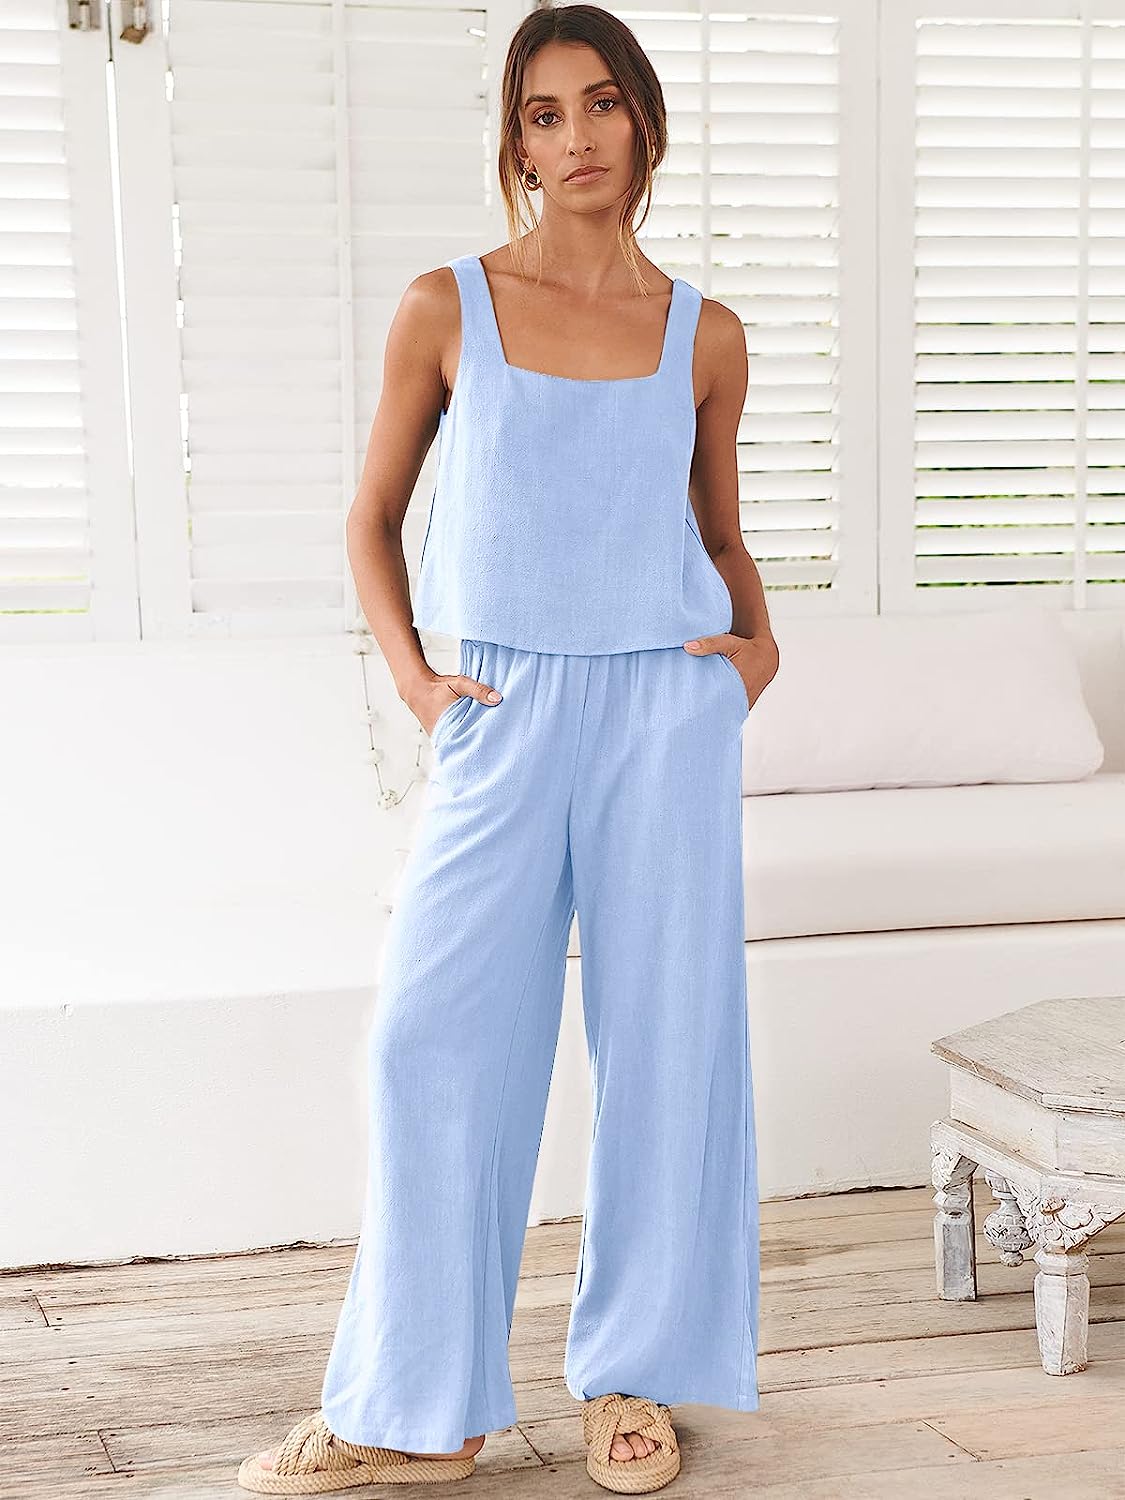 Prinbara Women's 2 Piece Outfits Lounge Sets Sleeveless Square Neck Linen  Tank Crop Top Wide Leg Pants Matching Sets 